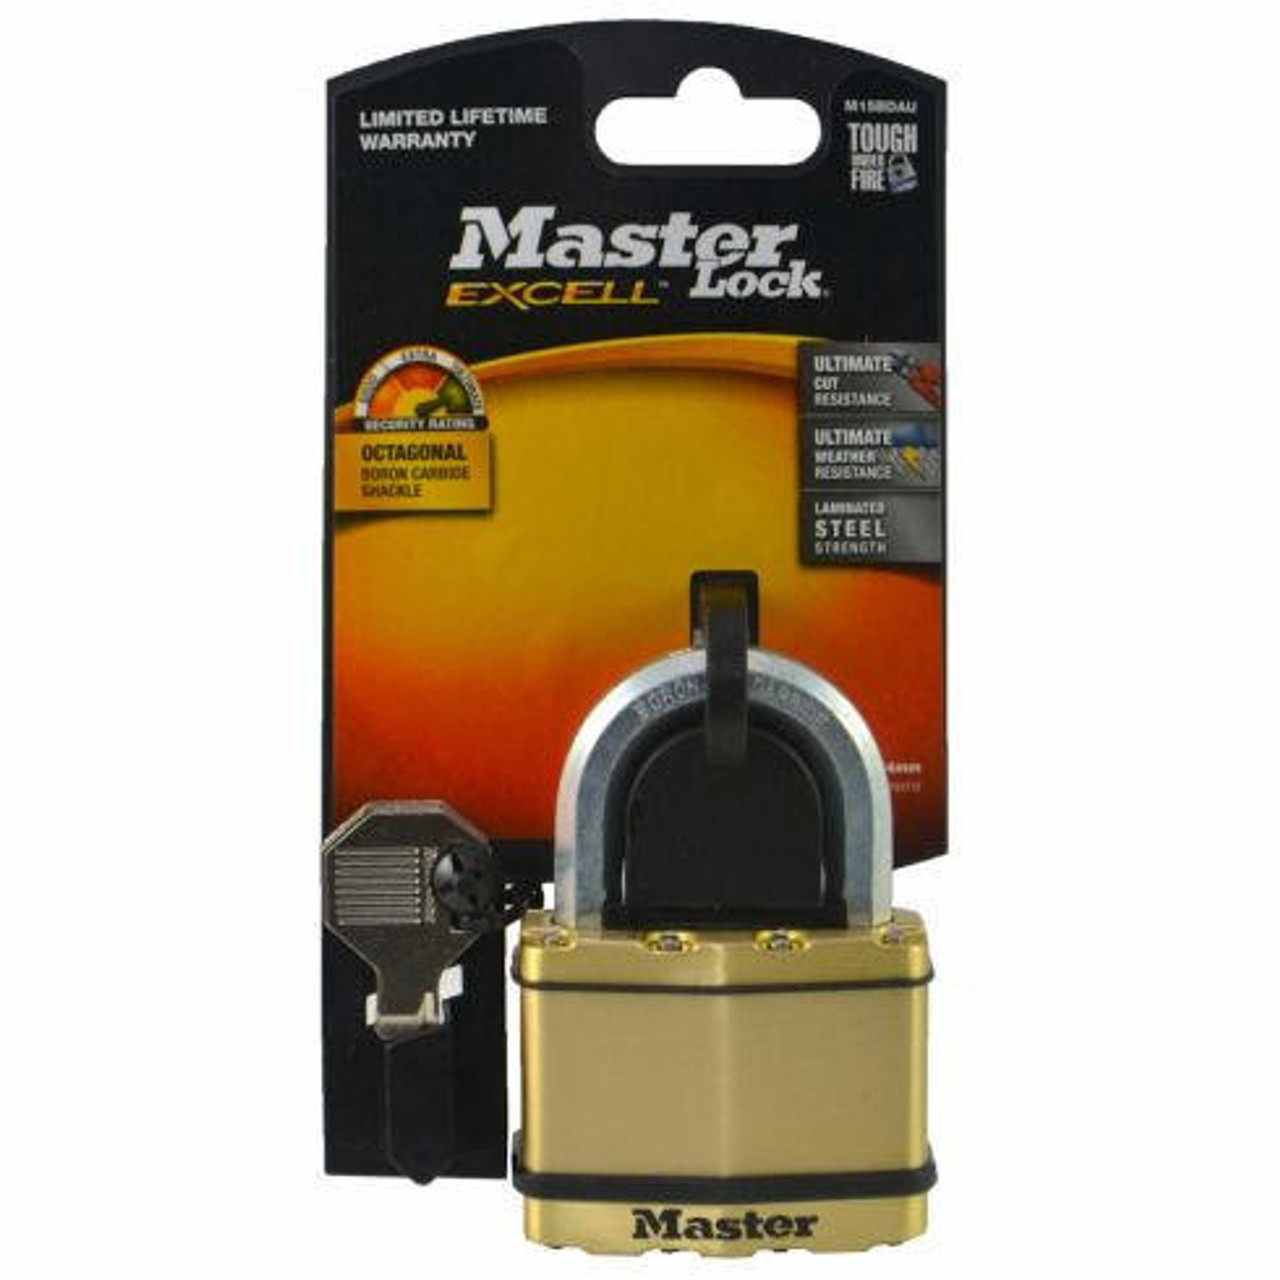 Master Lock Master Excell Padlock 24mm Shackle - M15BDAU